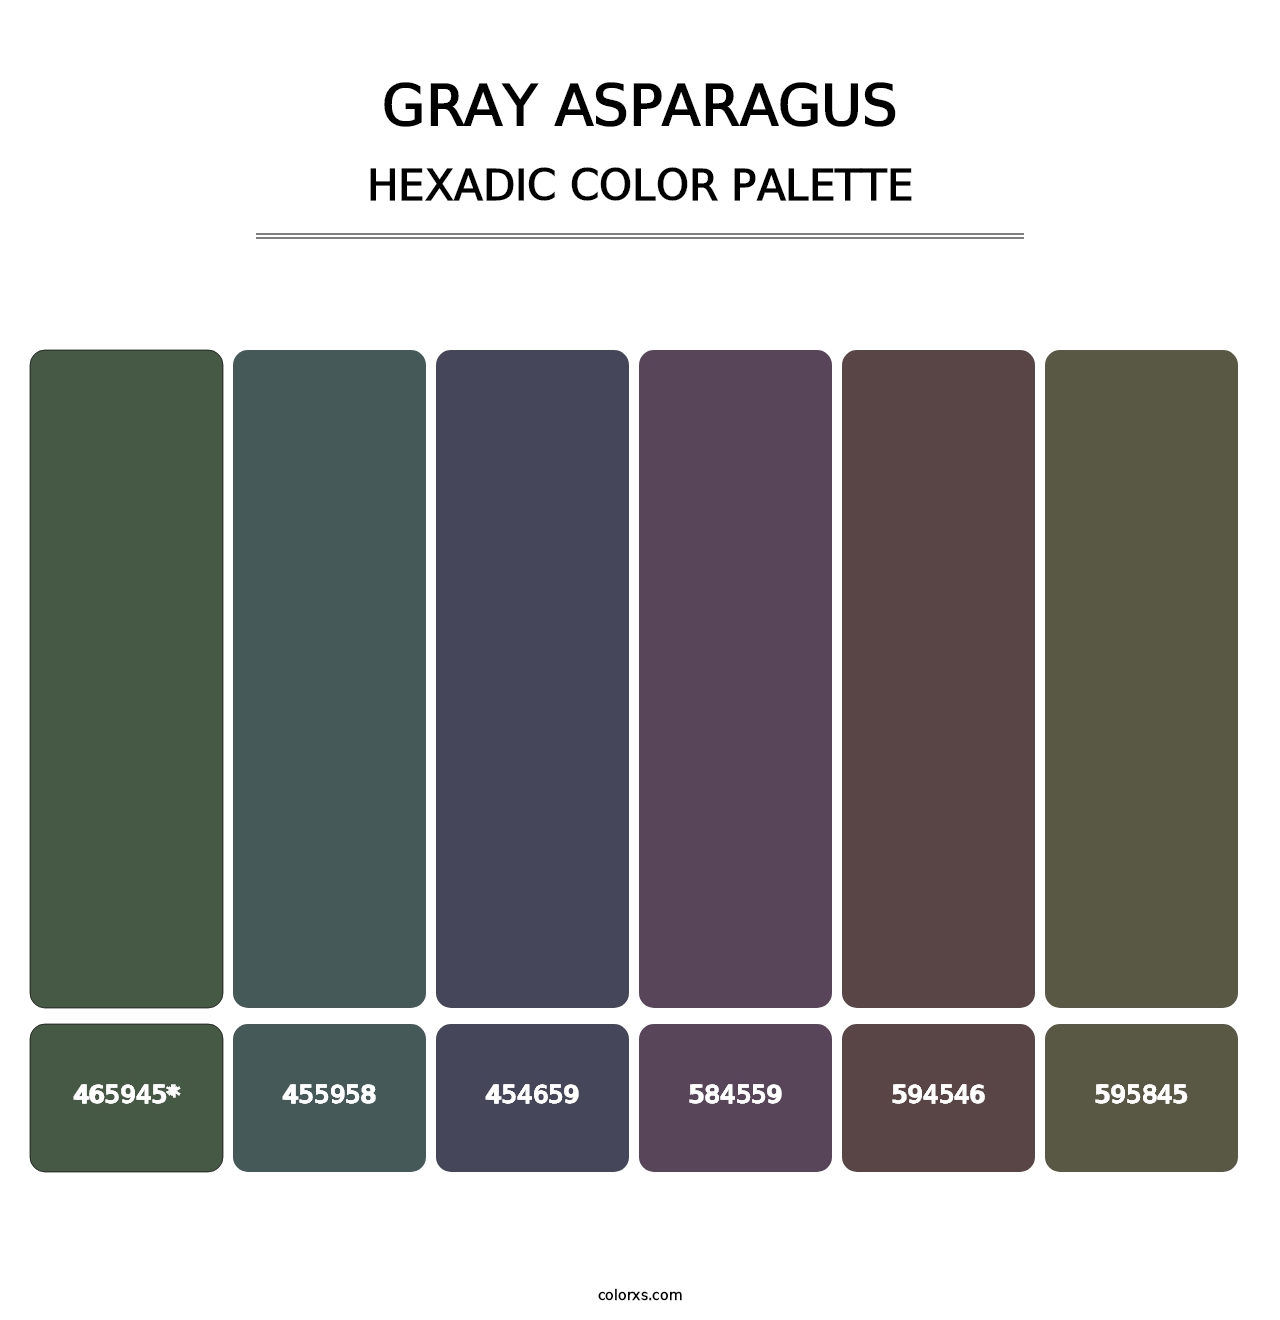 Gray Asparagus - Hexadic Color Palette